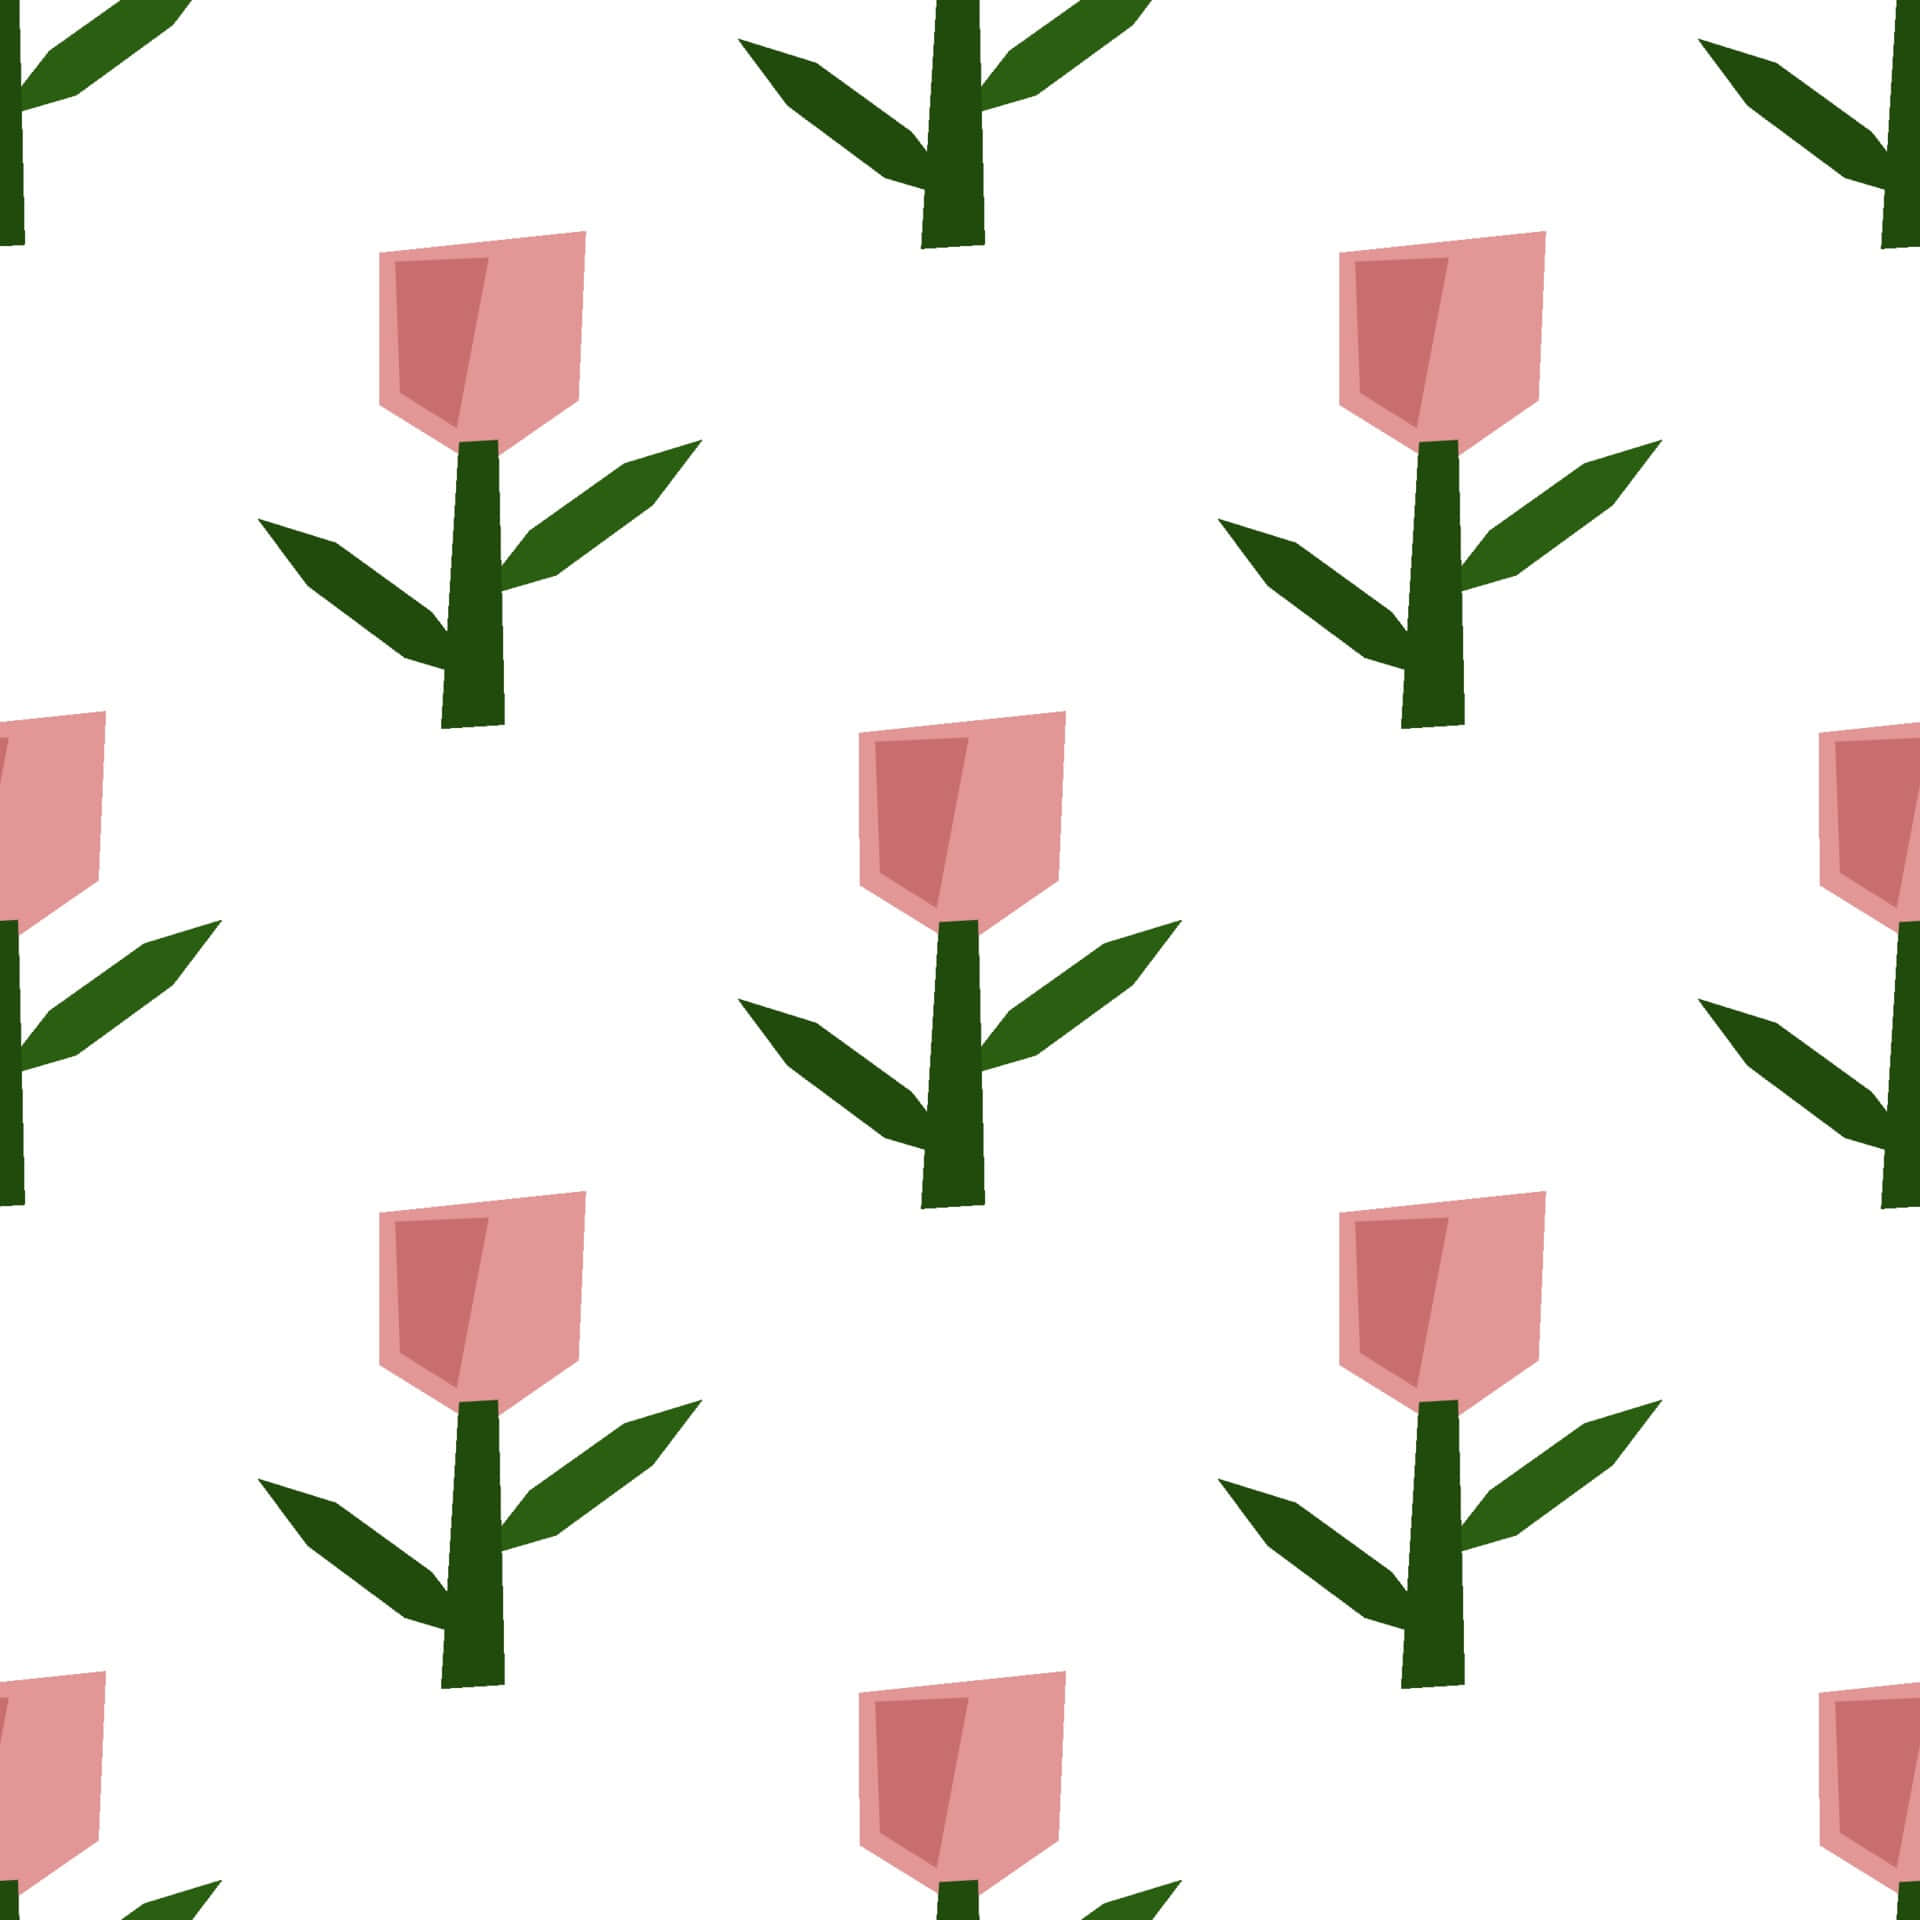 Patrónsimple De Tulipanes De Primavera. Fondo de pantalla